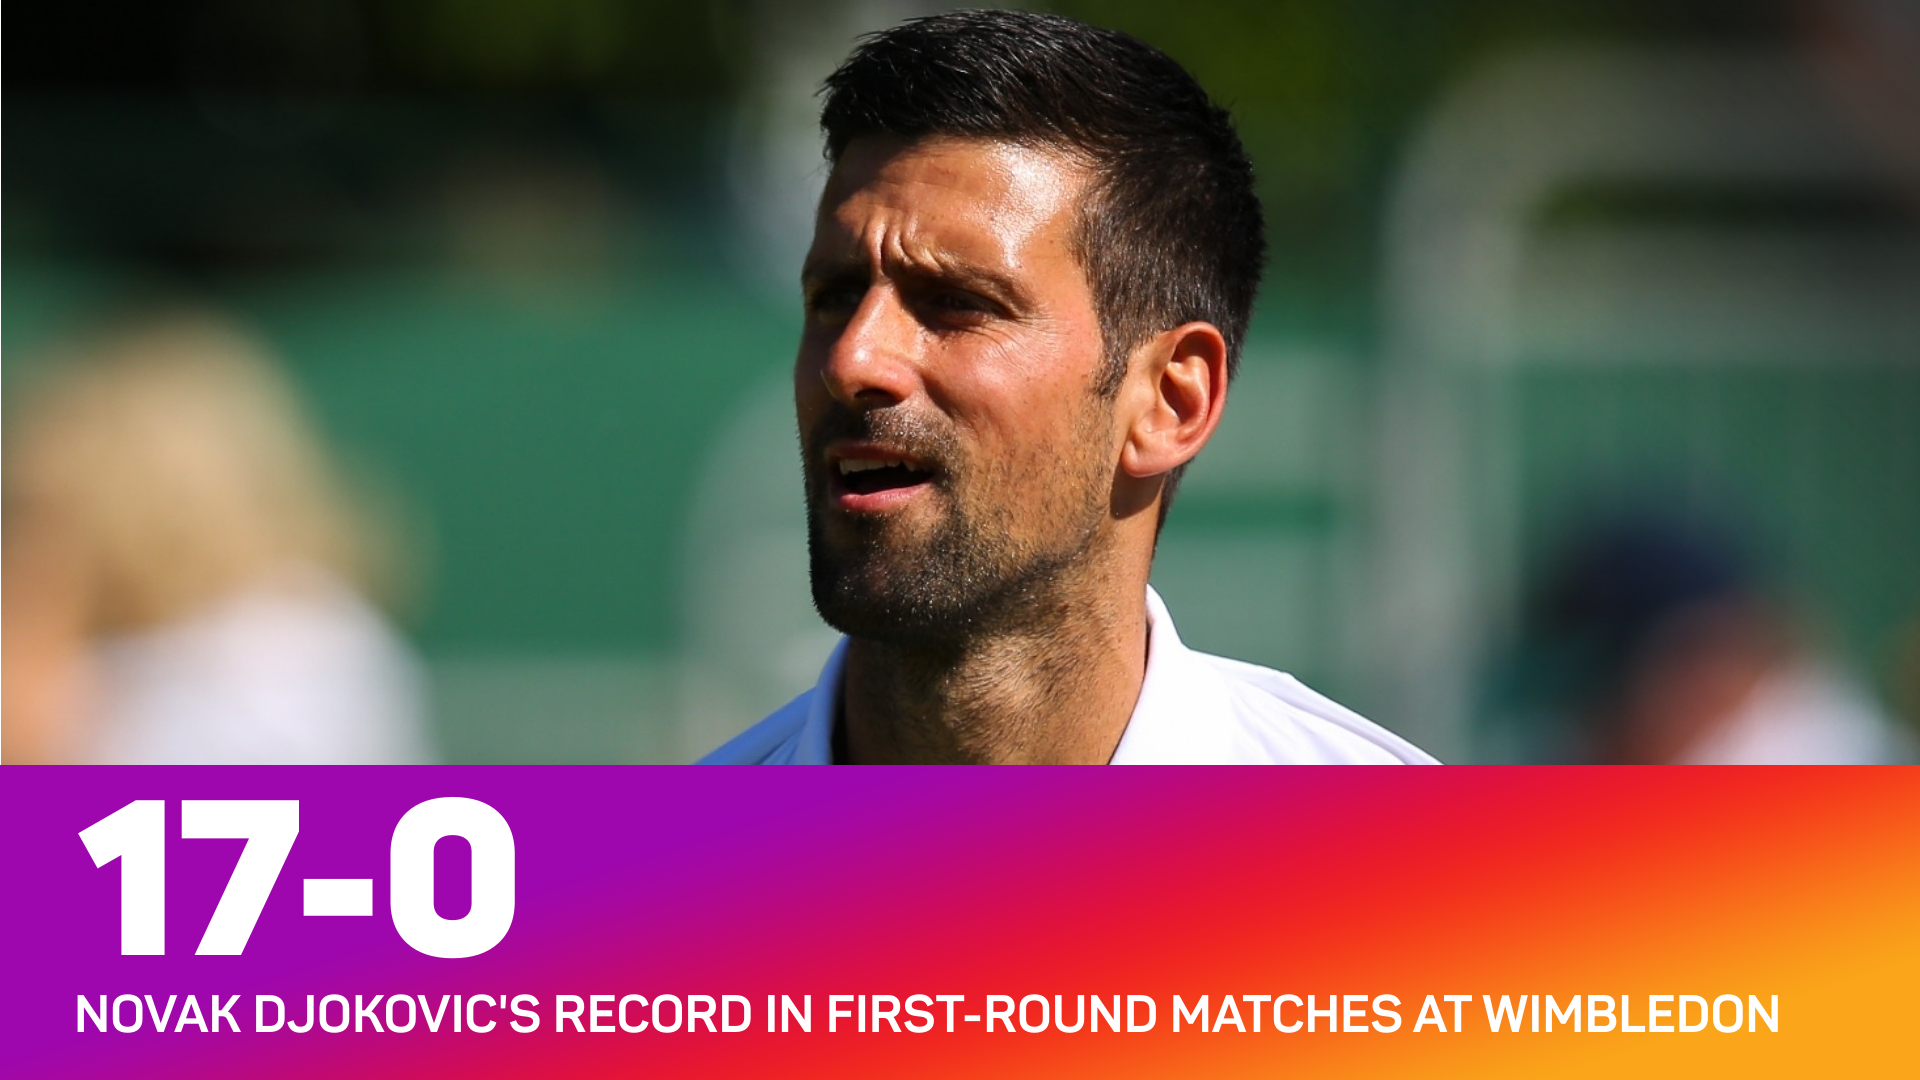 Novak Djokovic is 17-0 in first-round matches at Wimbledon